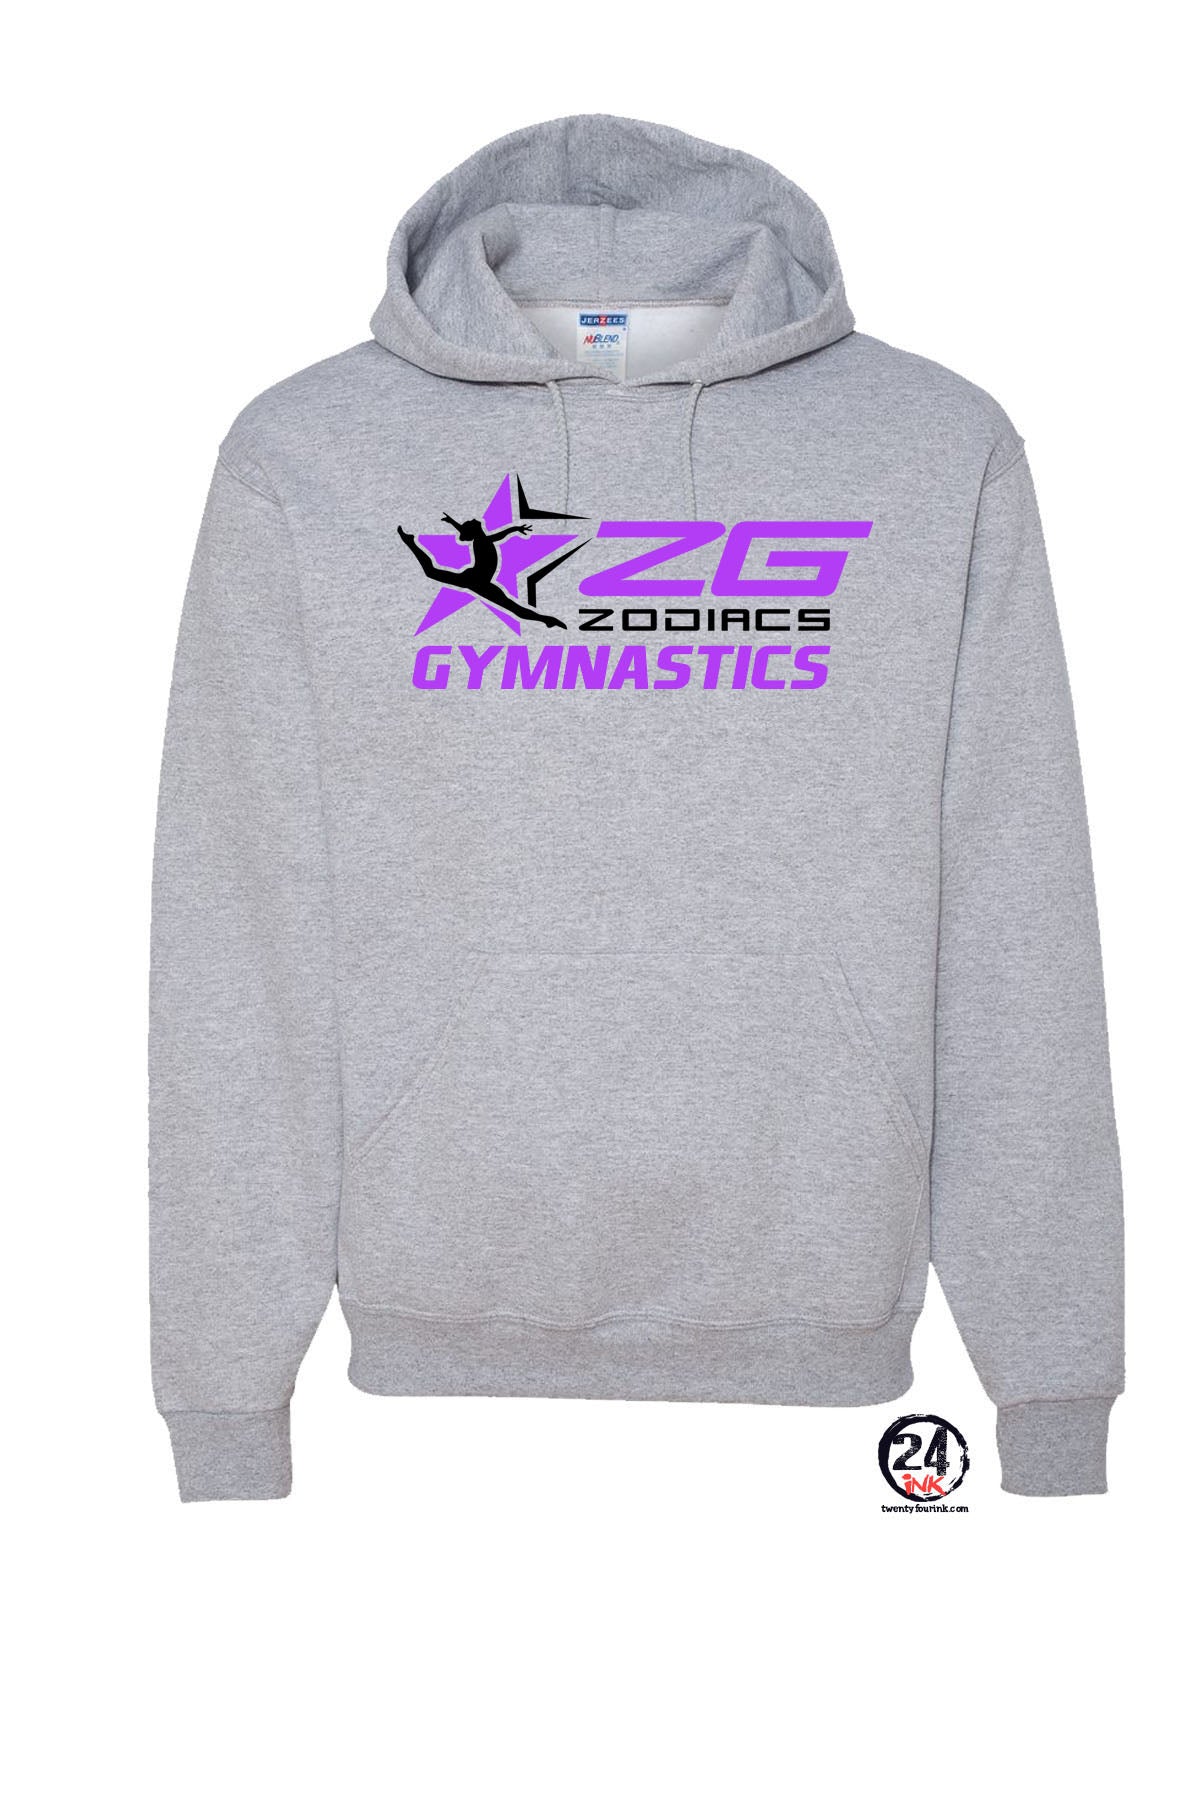 Zodiacs Gymnastics Hooded Sweatshirt